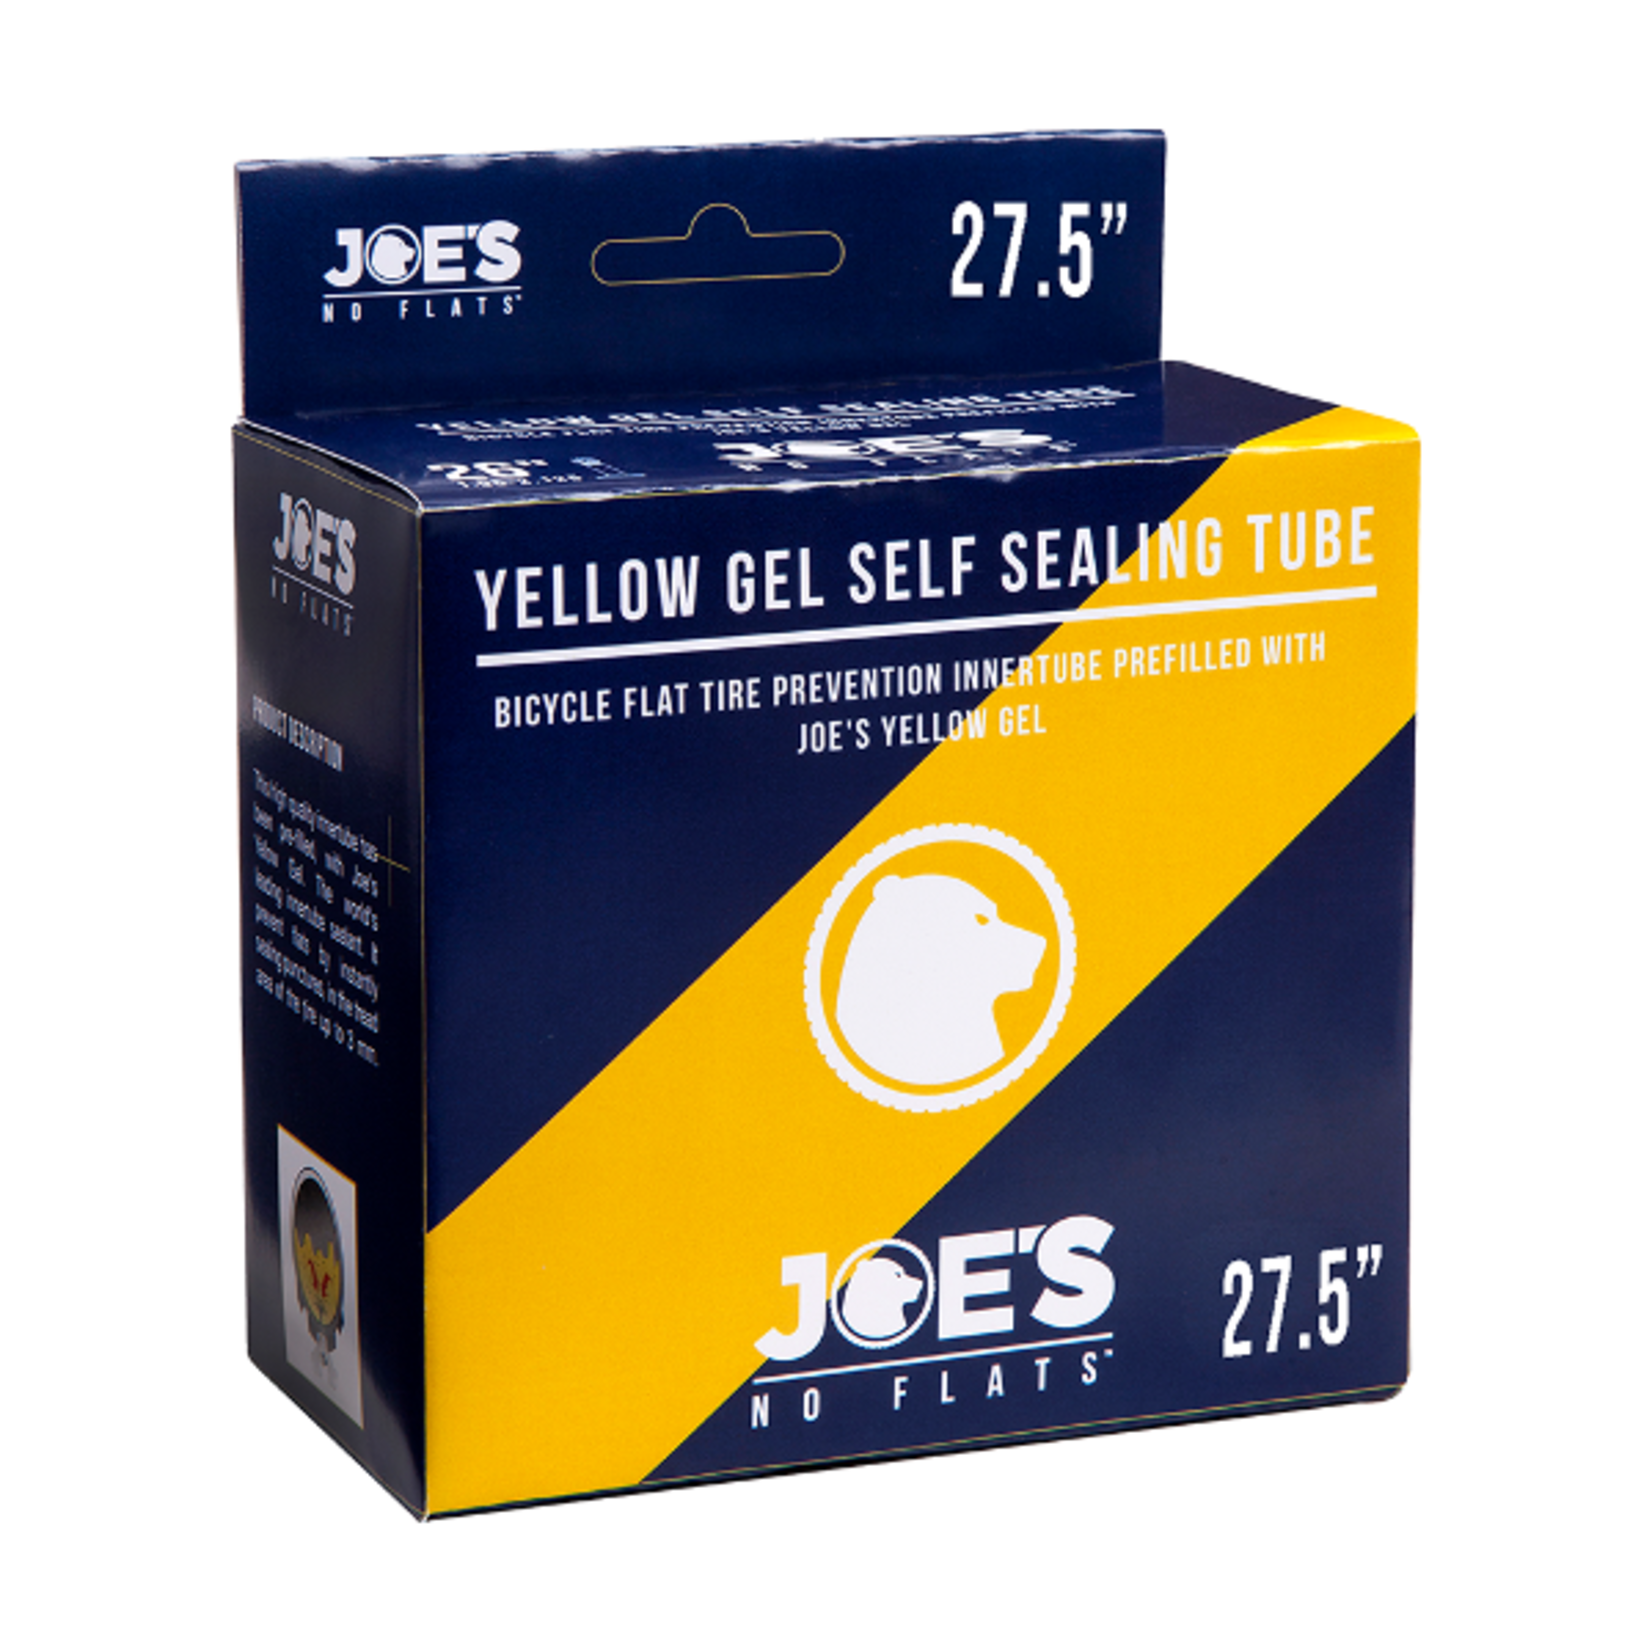 Joes Joes No Flats Yellow Gel Self-Sealing Tube - 27.5 X 1.9/2.35 PV 48mm